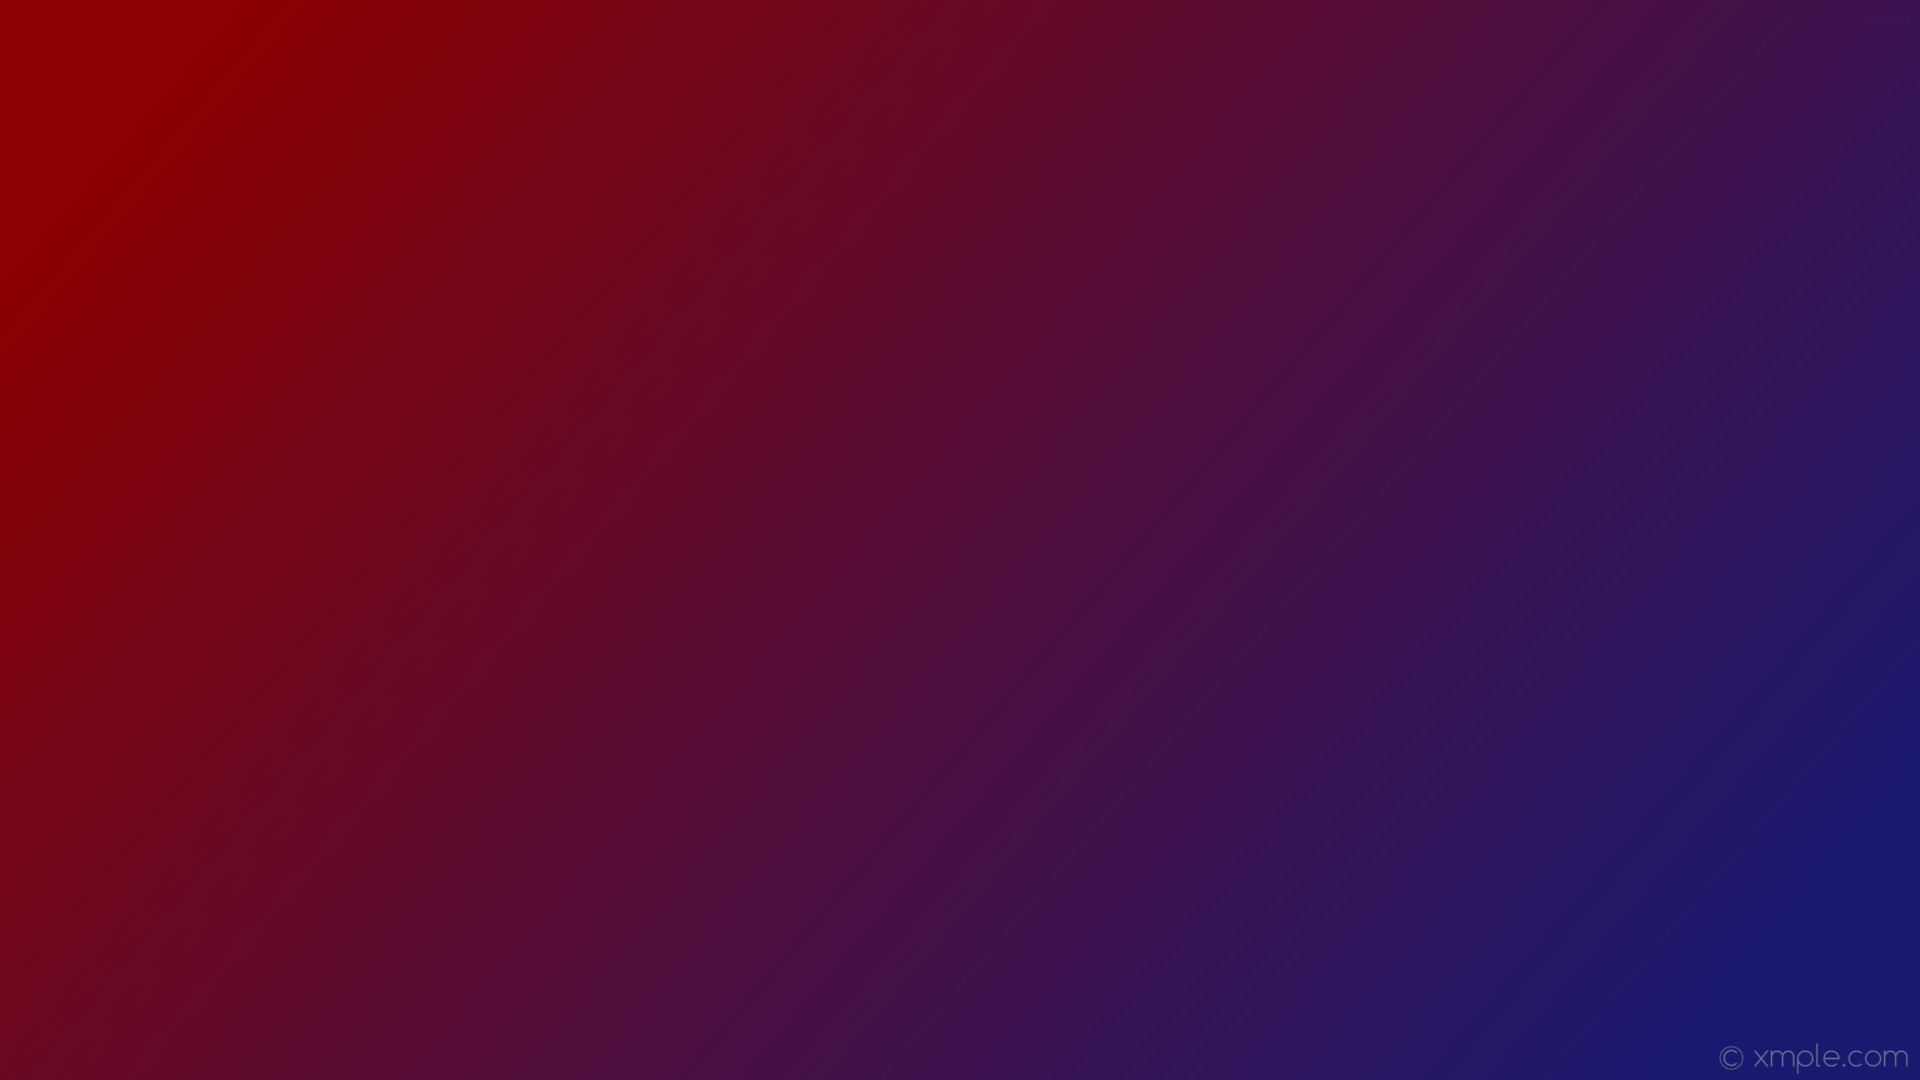 1920x1080 wallpaper gradient red blue linear midnight blue dark red #191970 #8b0000  345Â°